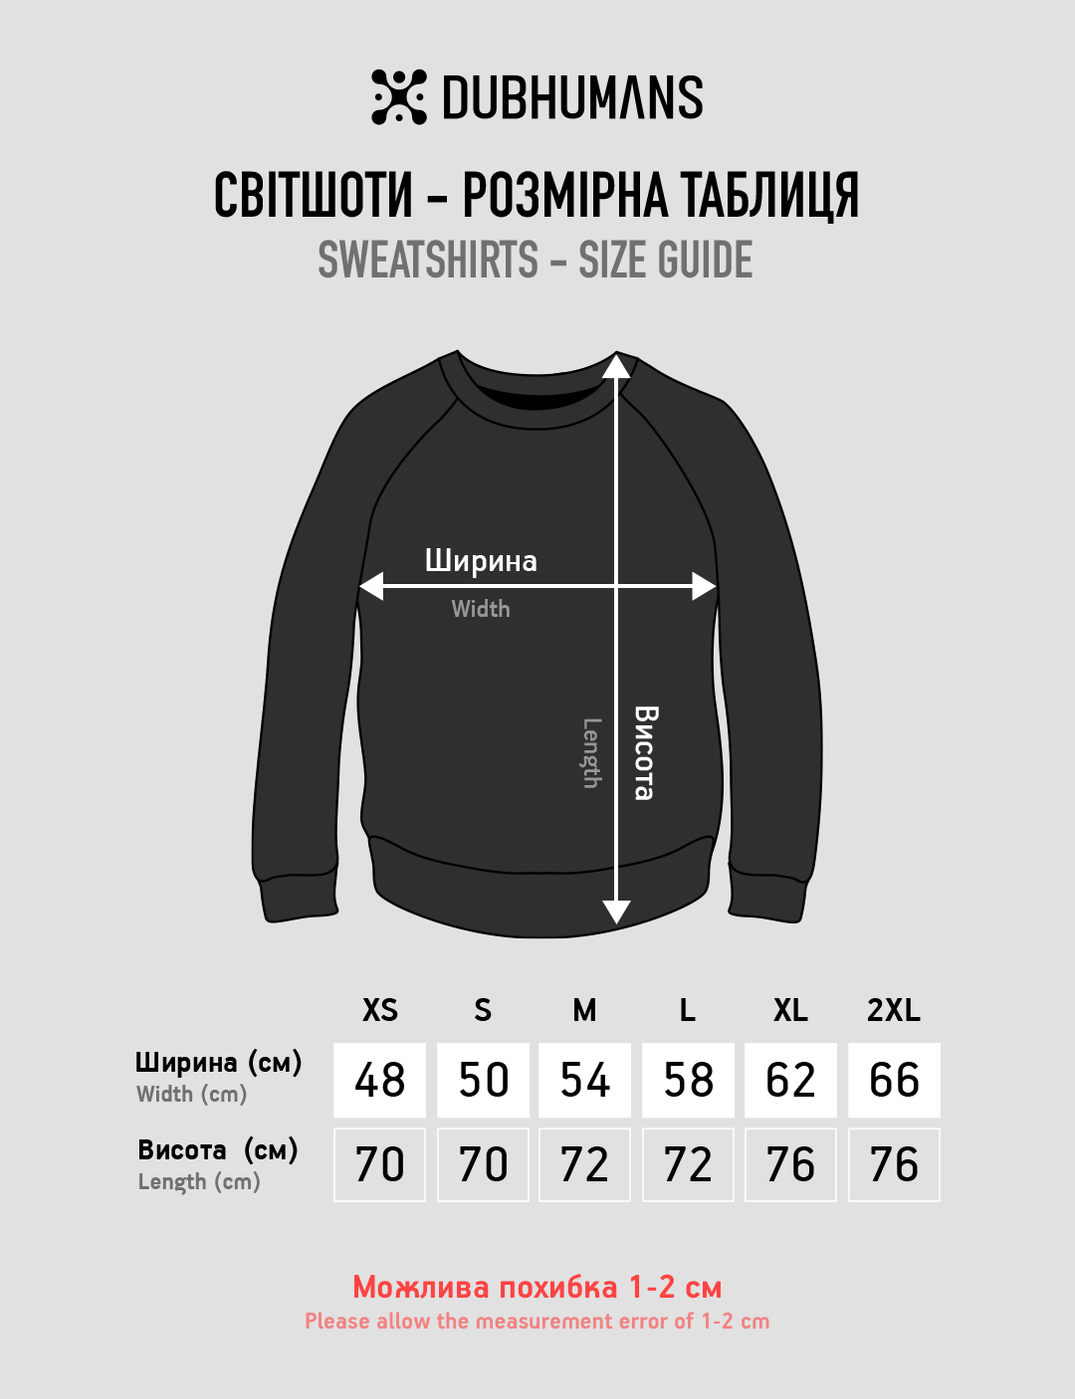 Men's Sweatshirt “Decentralized” with Bitcoin Cryptocurrency, Black, M